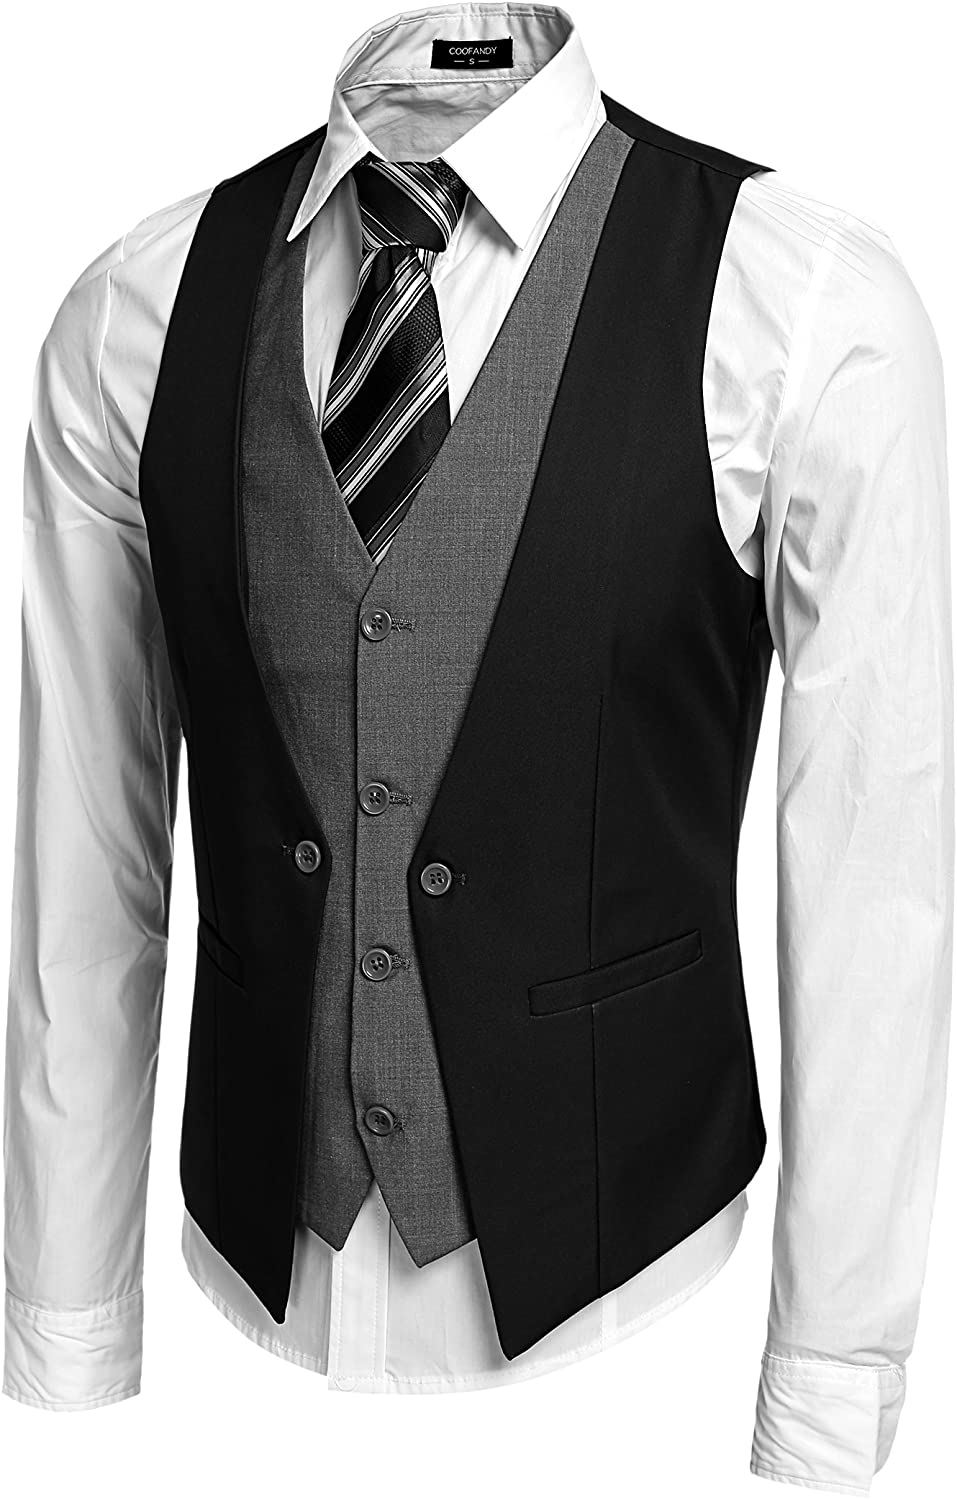 COOFANDY Men's V-Neck Suit Vests Fashion Formal Slim Fit Business Dress Vest Waistcoat 